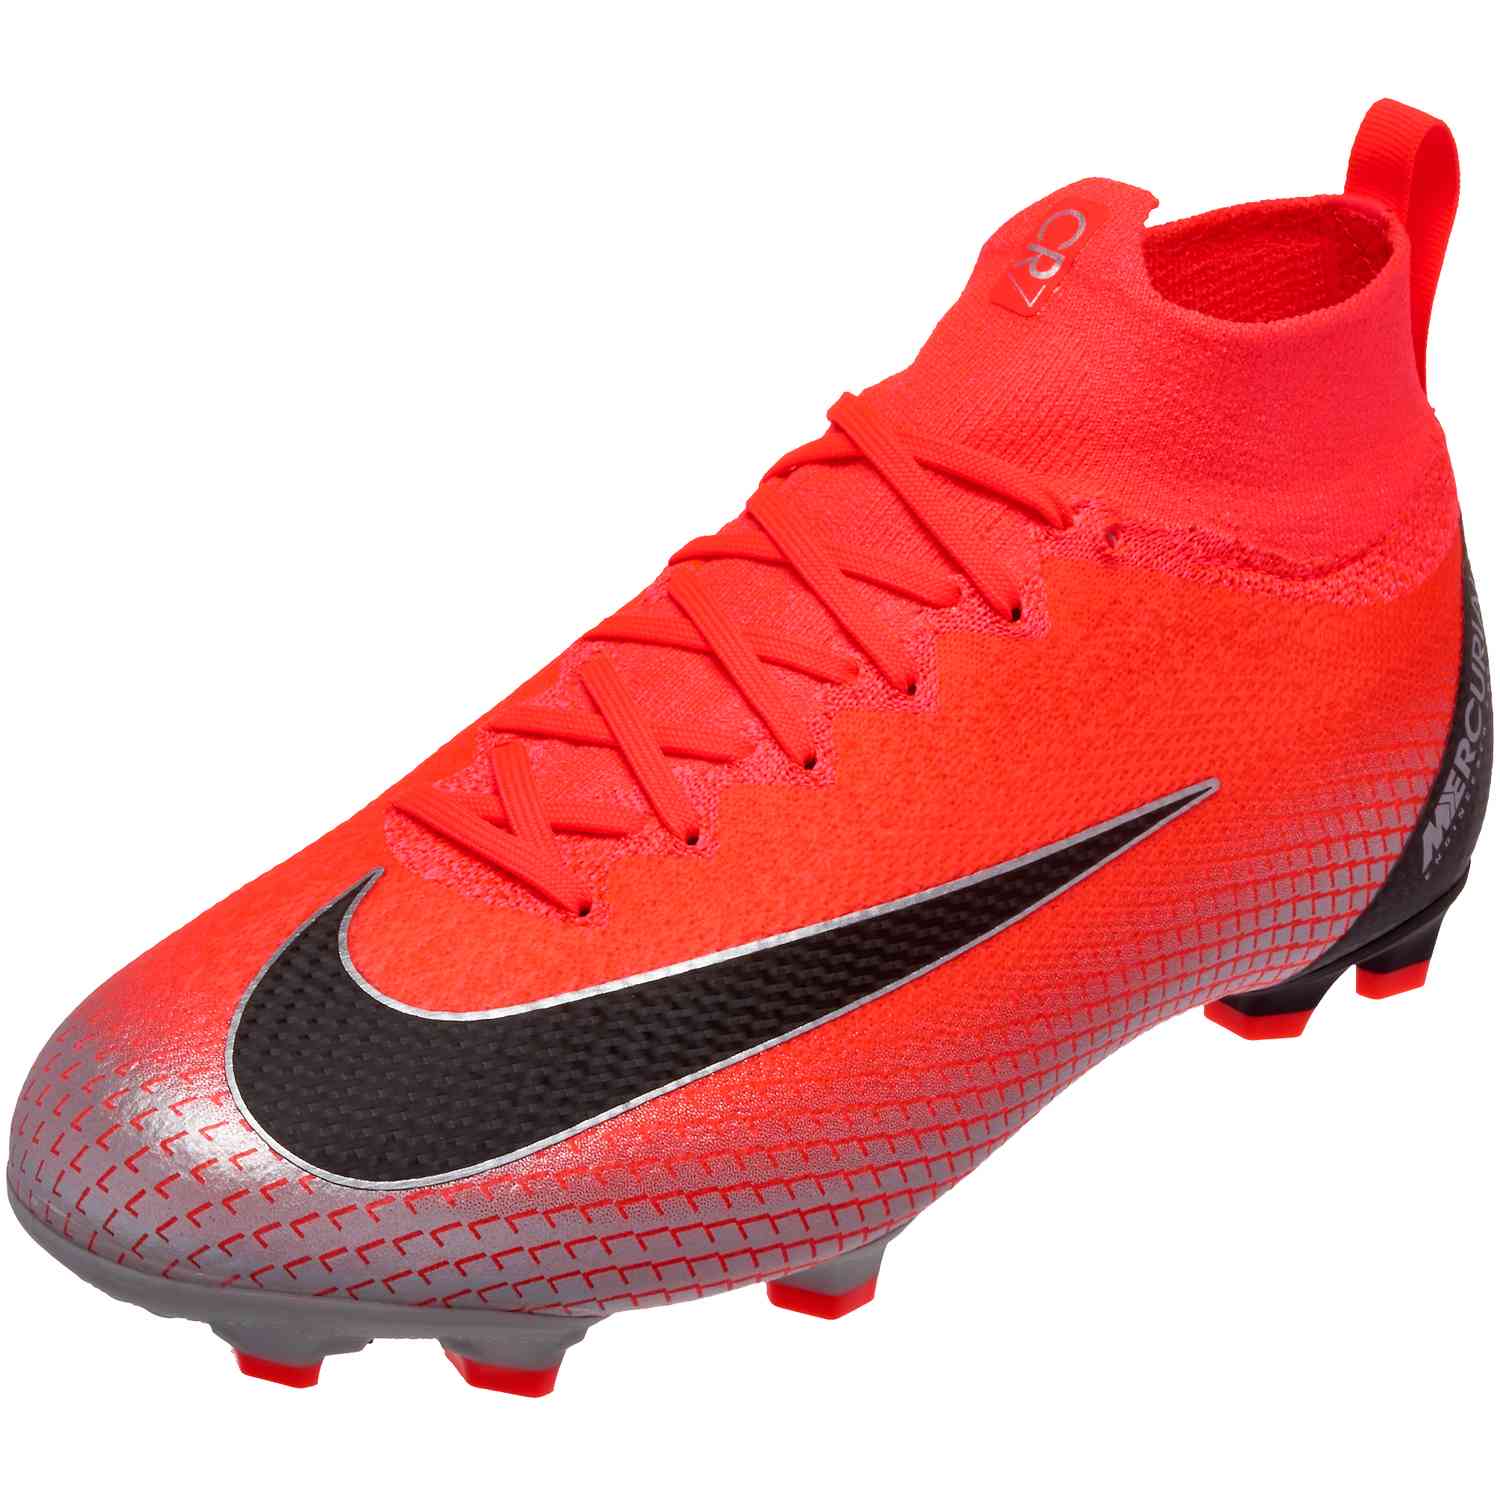 Cristiano Ronaldo CR7 Nike football boots Soccer boots